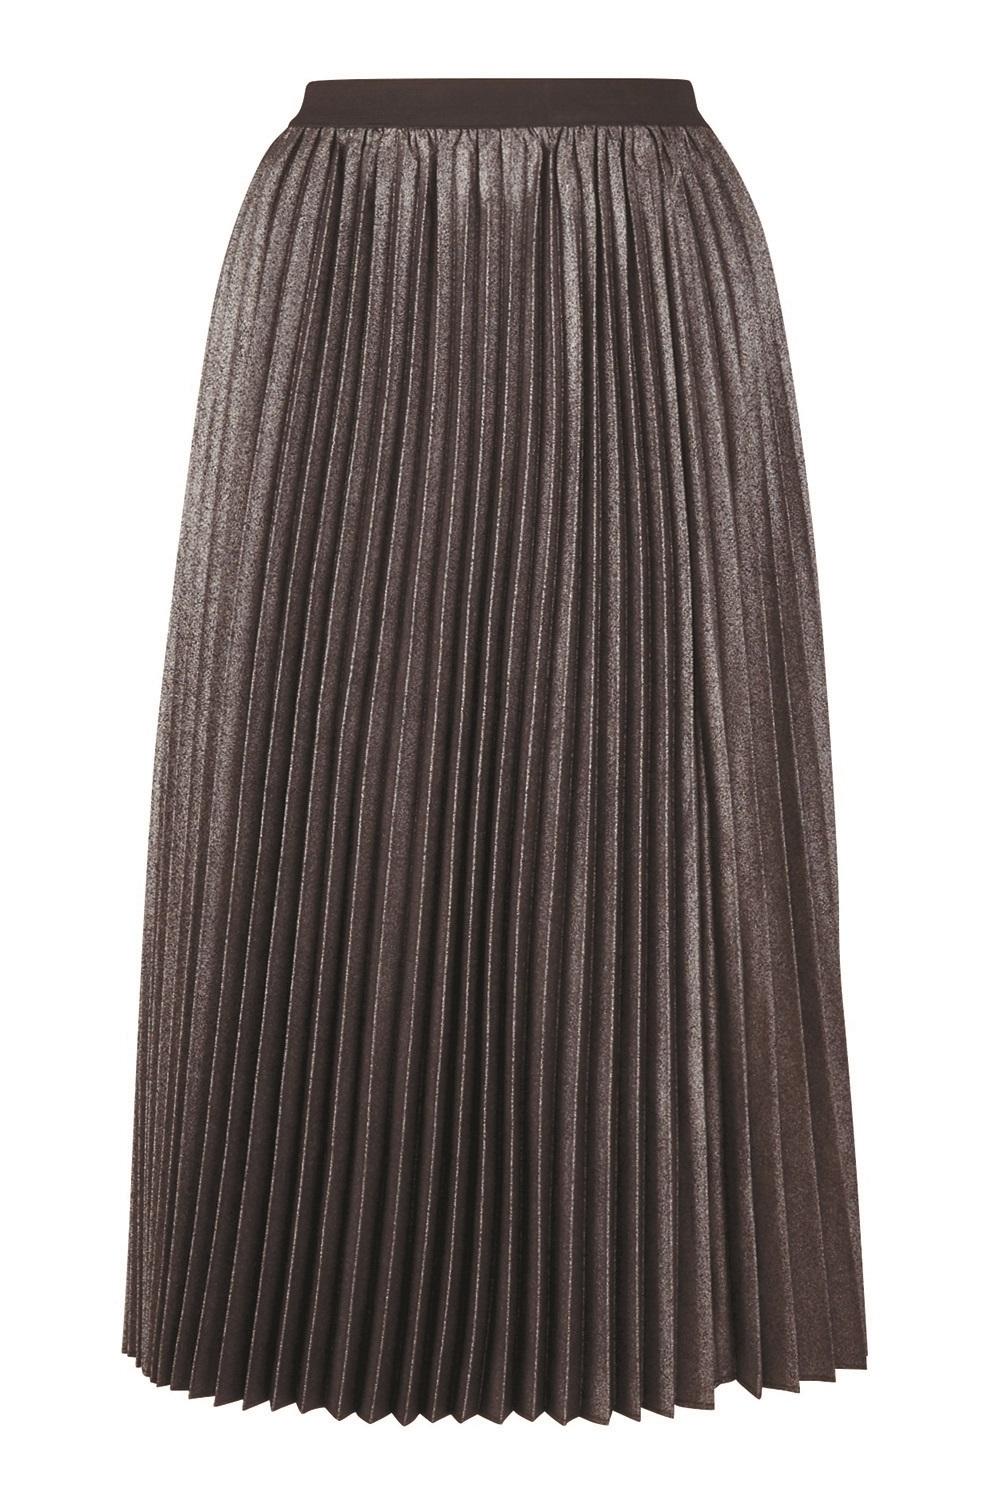 Very.co.uk, Metallic Pleated Skirt, £32